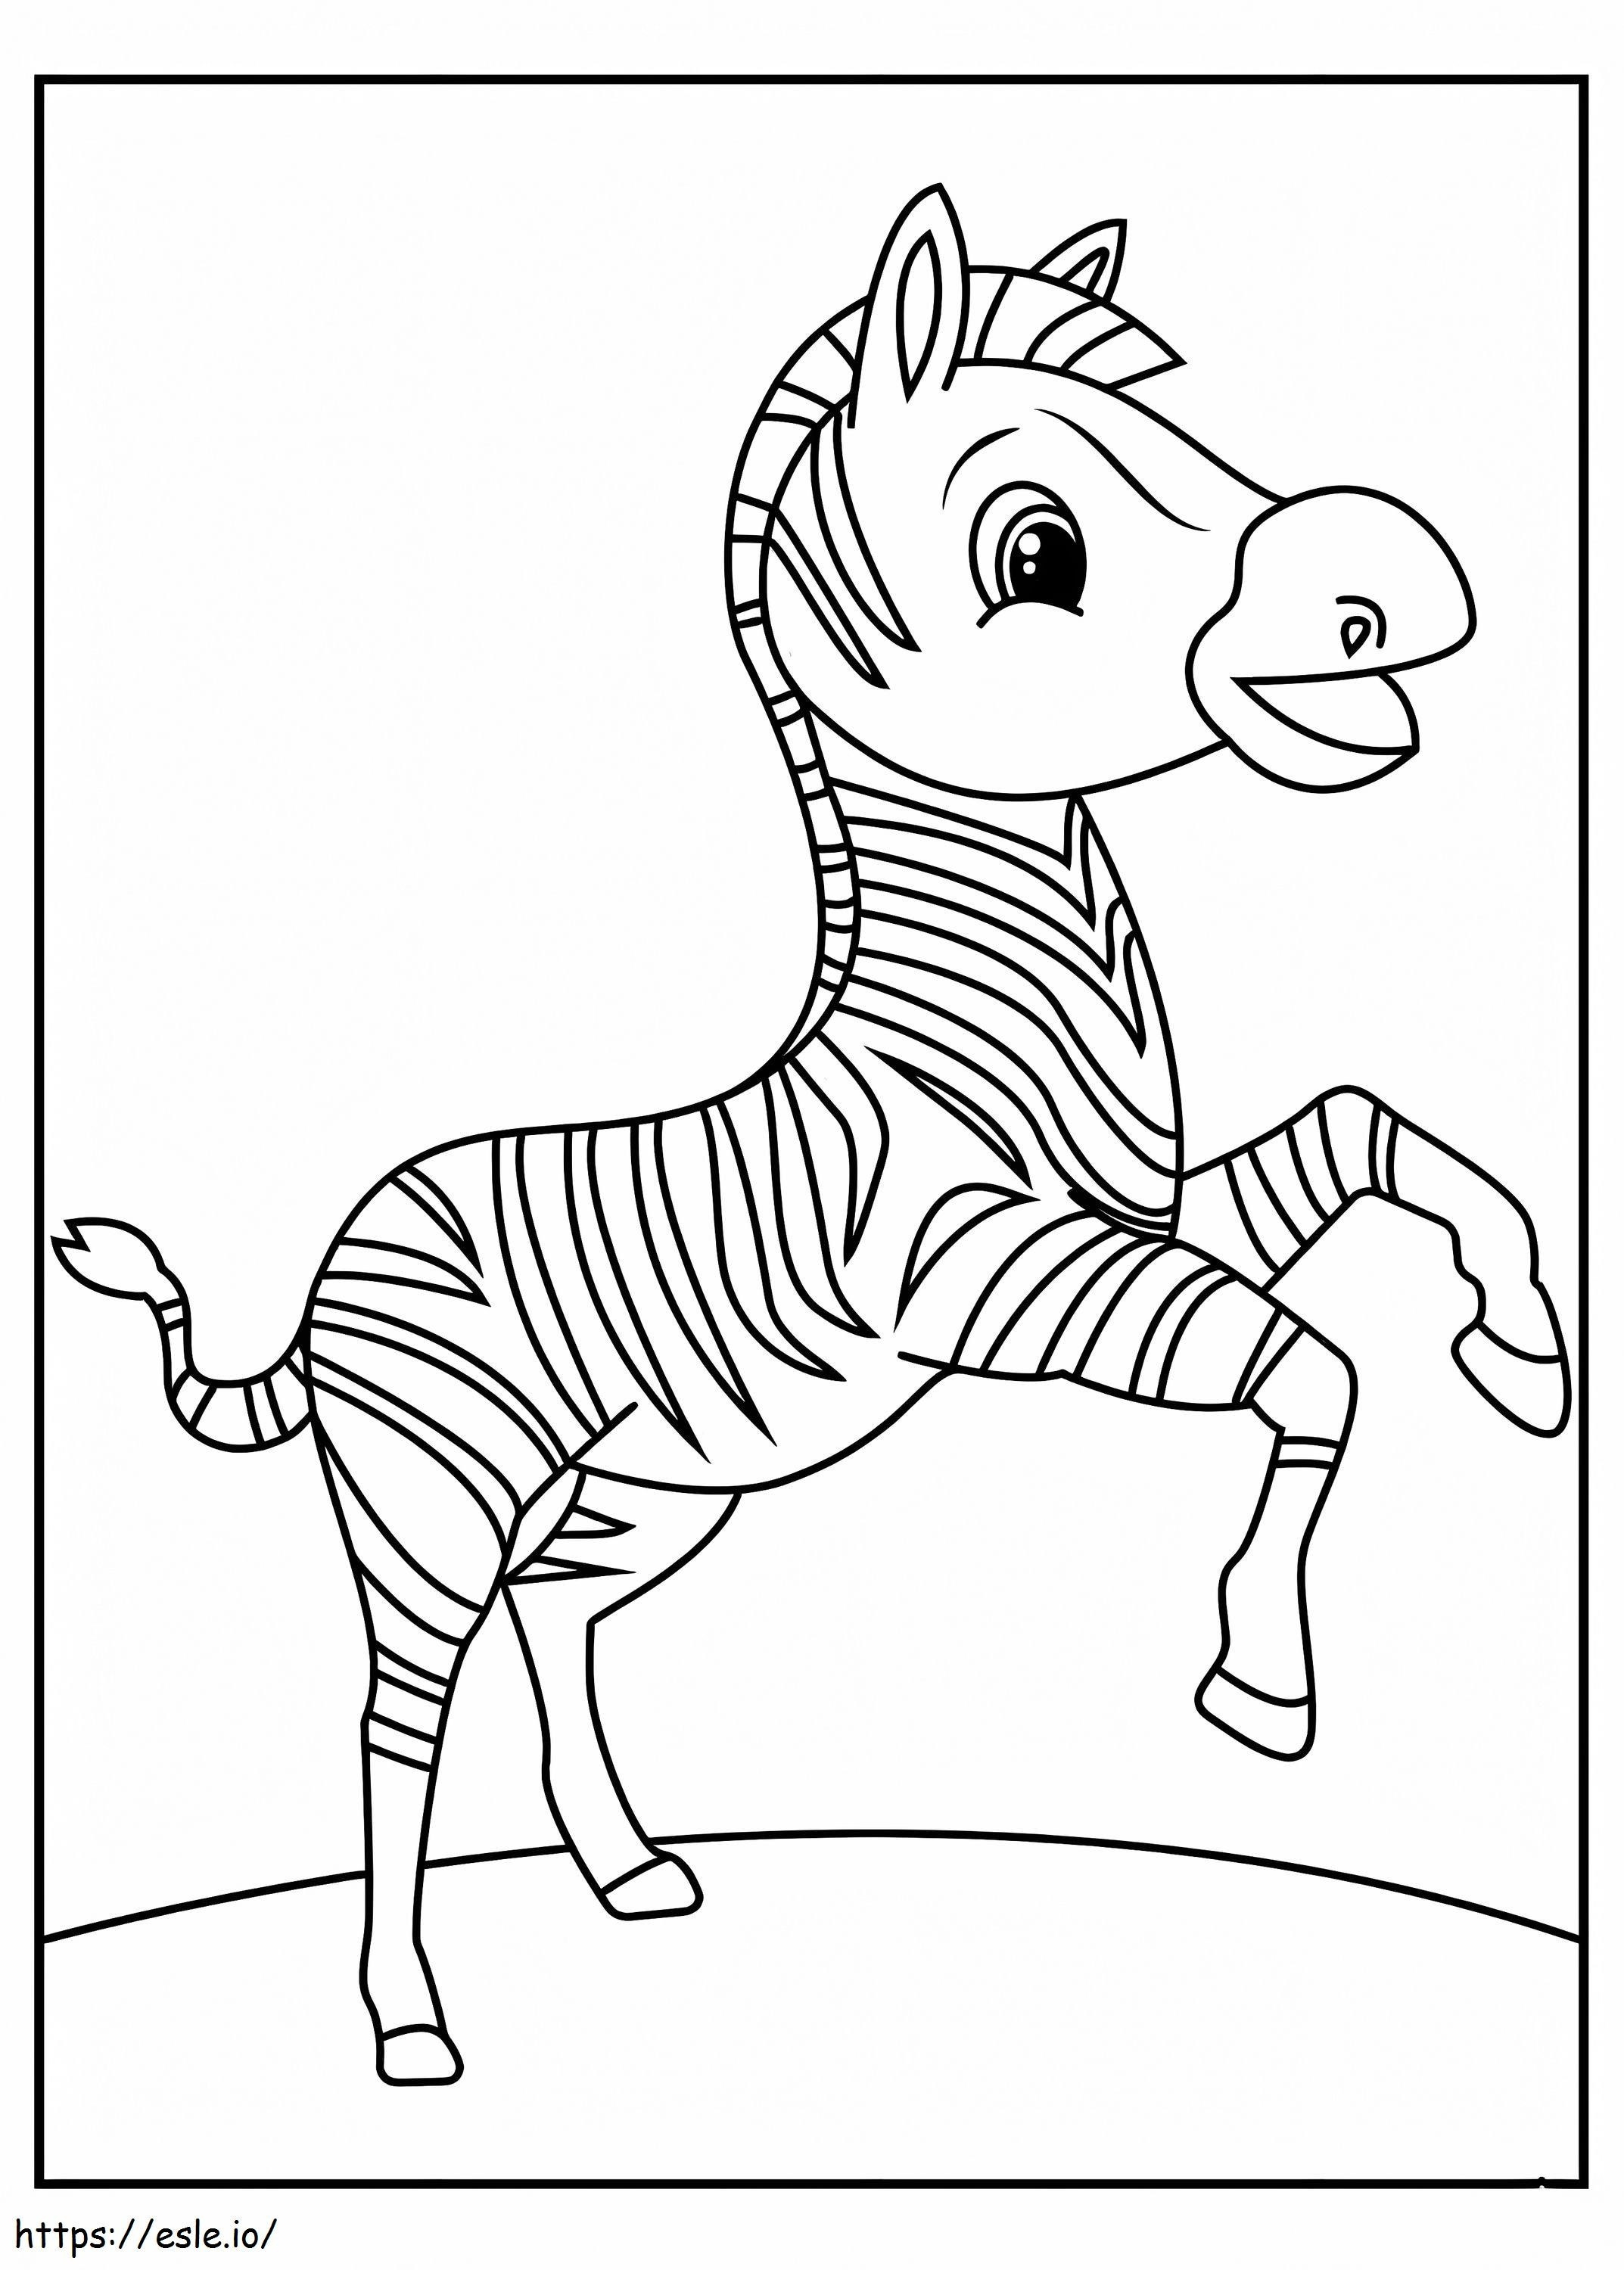 Salto de zebra para colorir